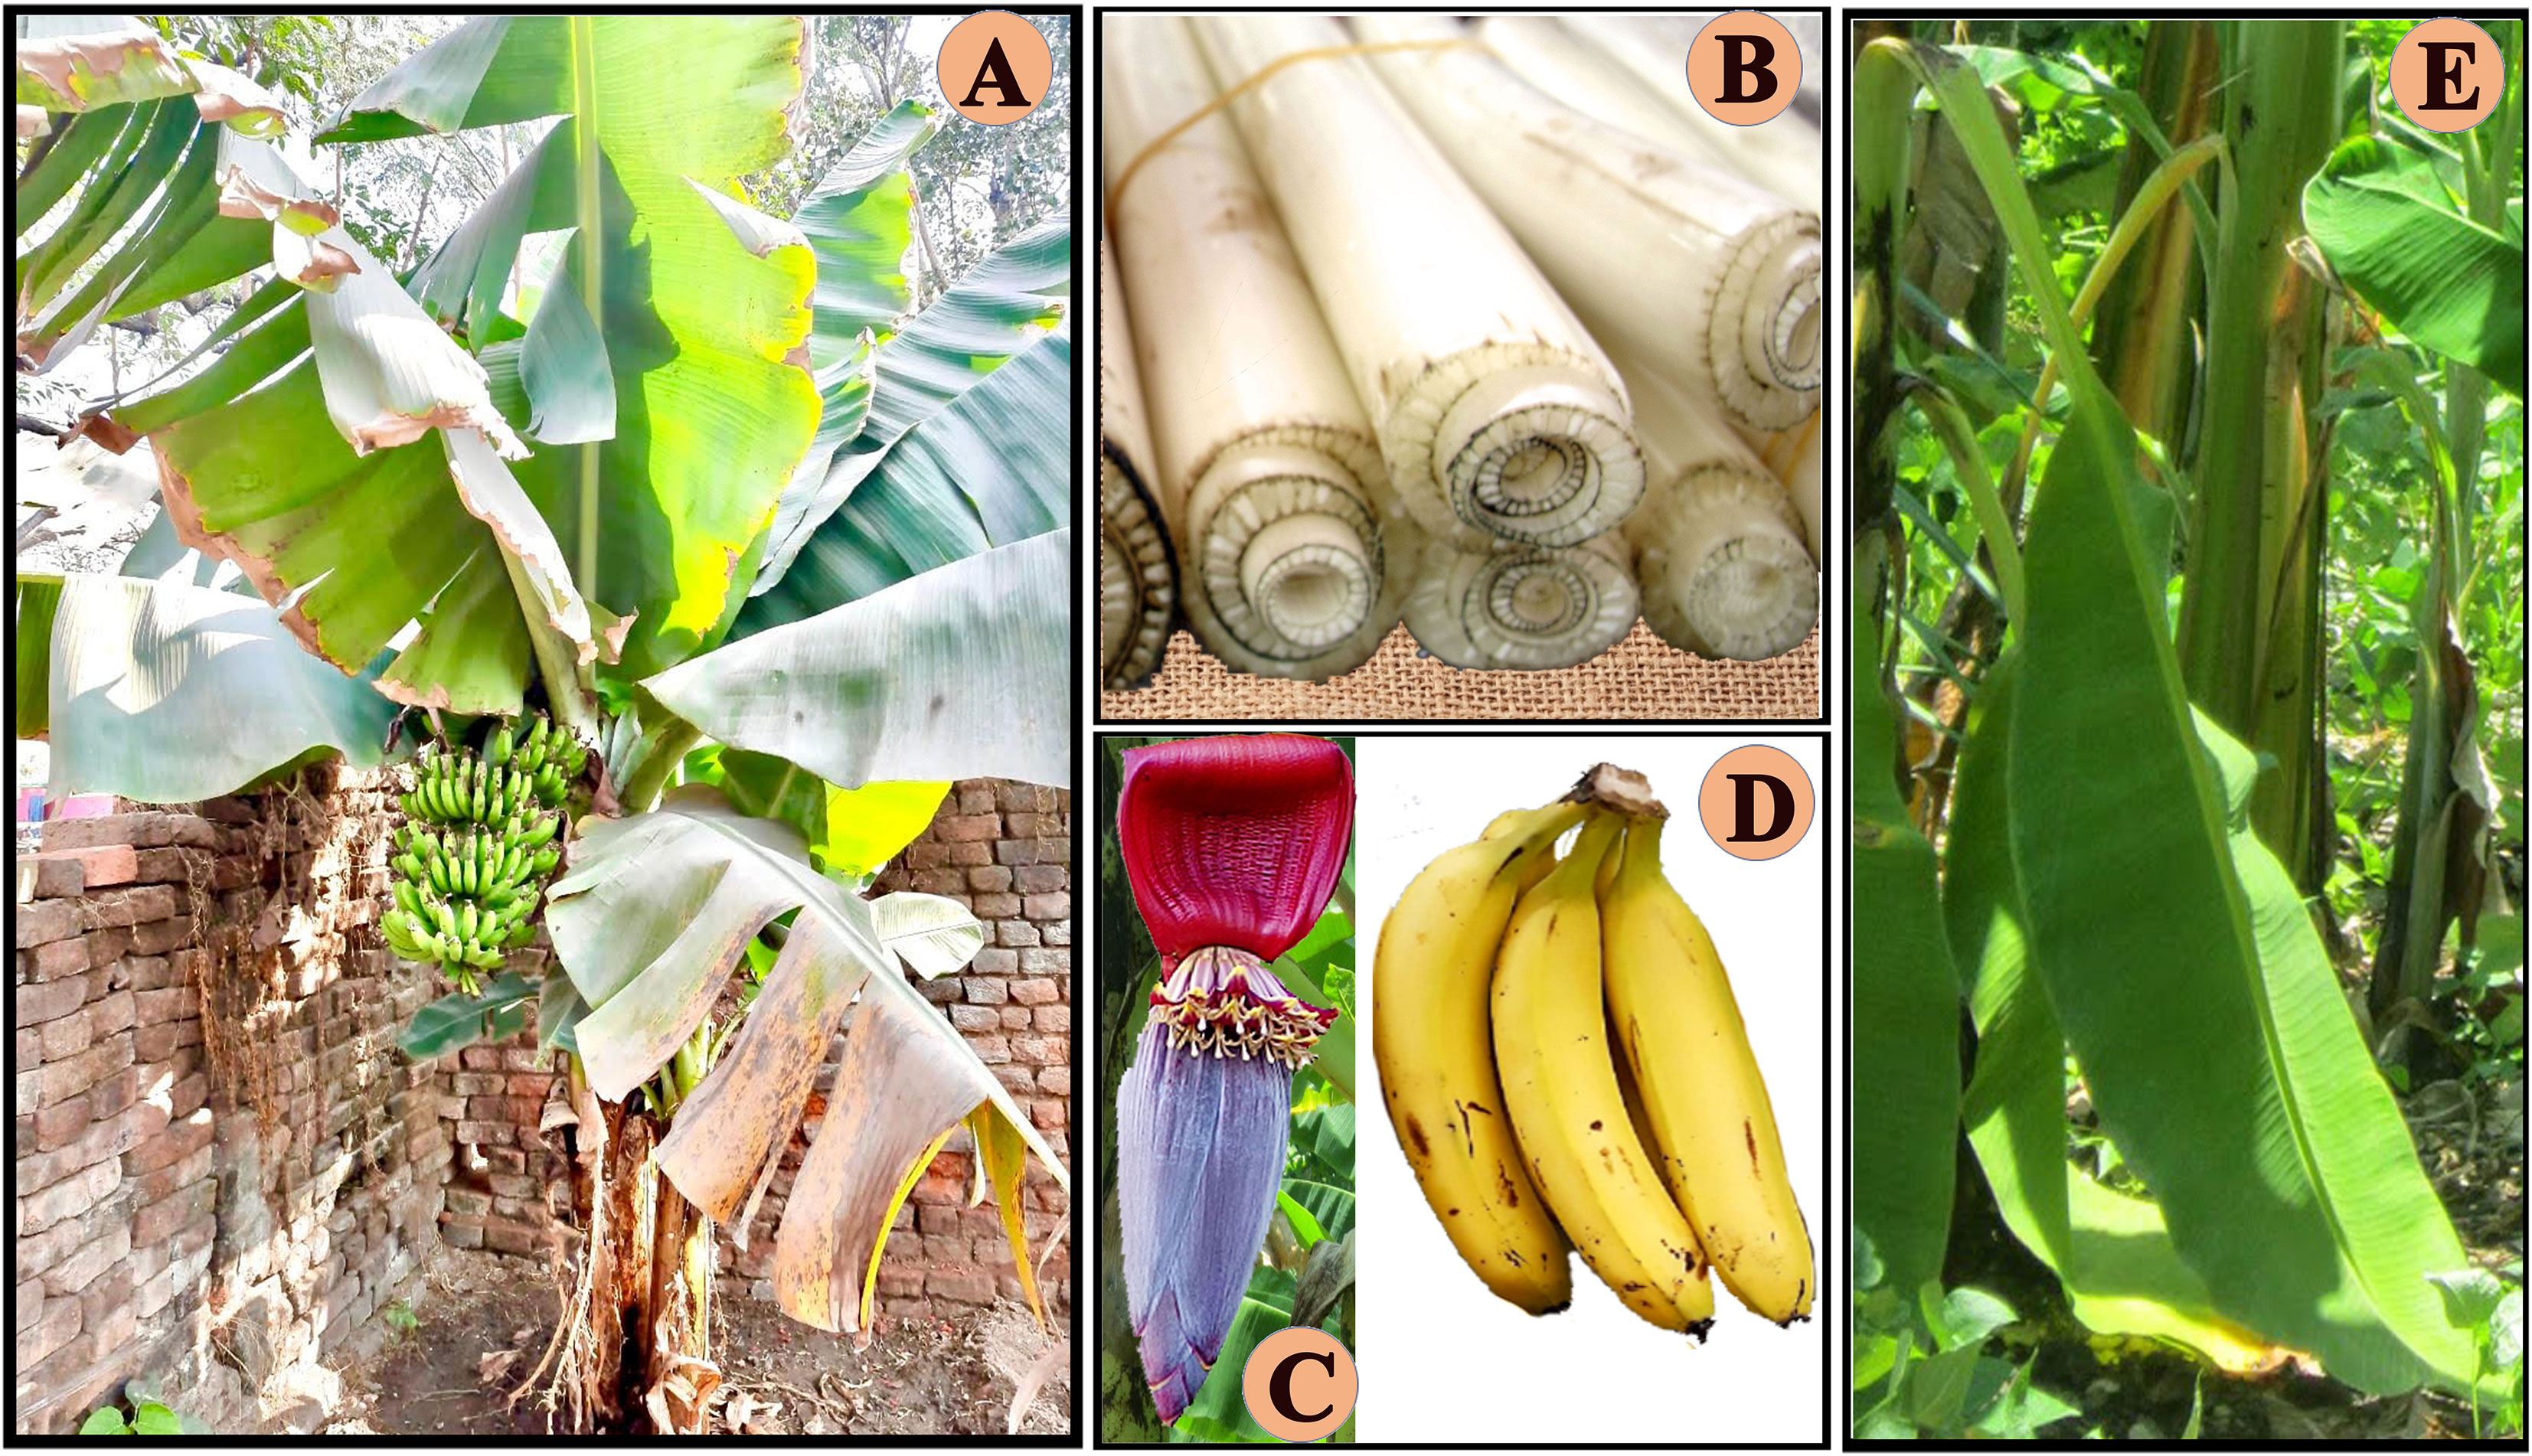 Industrial Banana Peeler for Peeling Green Bananas, Ripe Bananas & Plantain